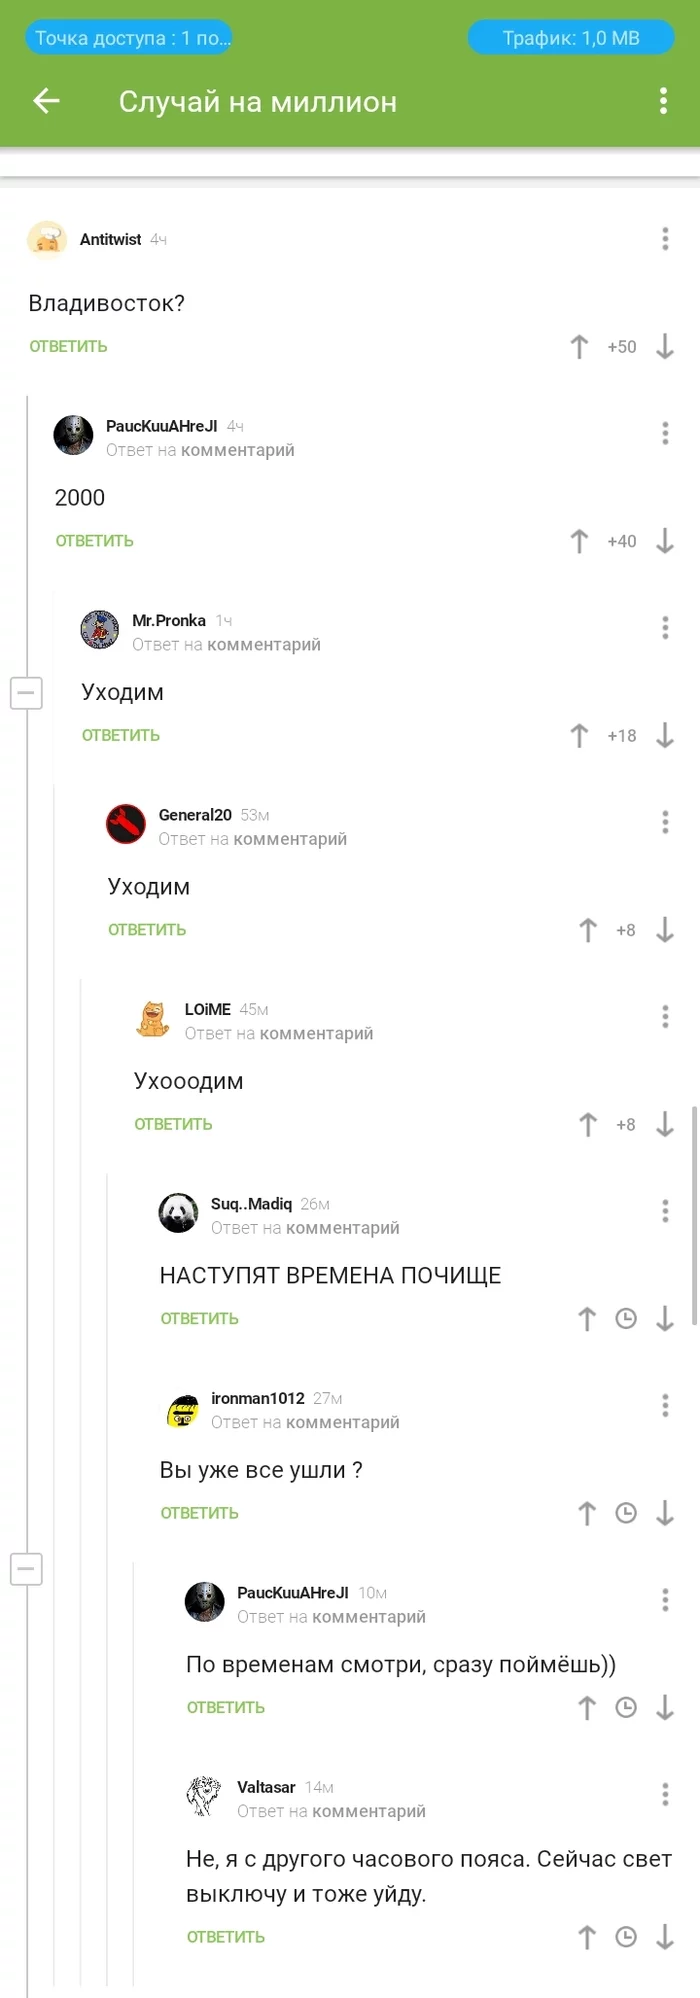 Pikabushniks leave, photo in color - Comments, Comments on Peekaboo, Screenshot, Go, Pick-up headphones, Vladivostok, Longpost